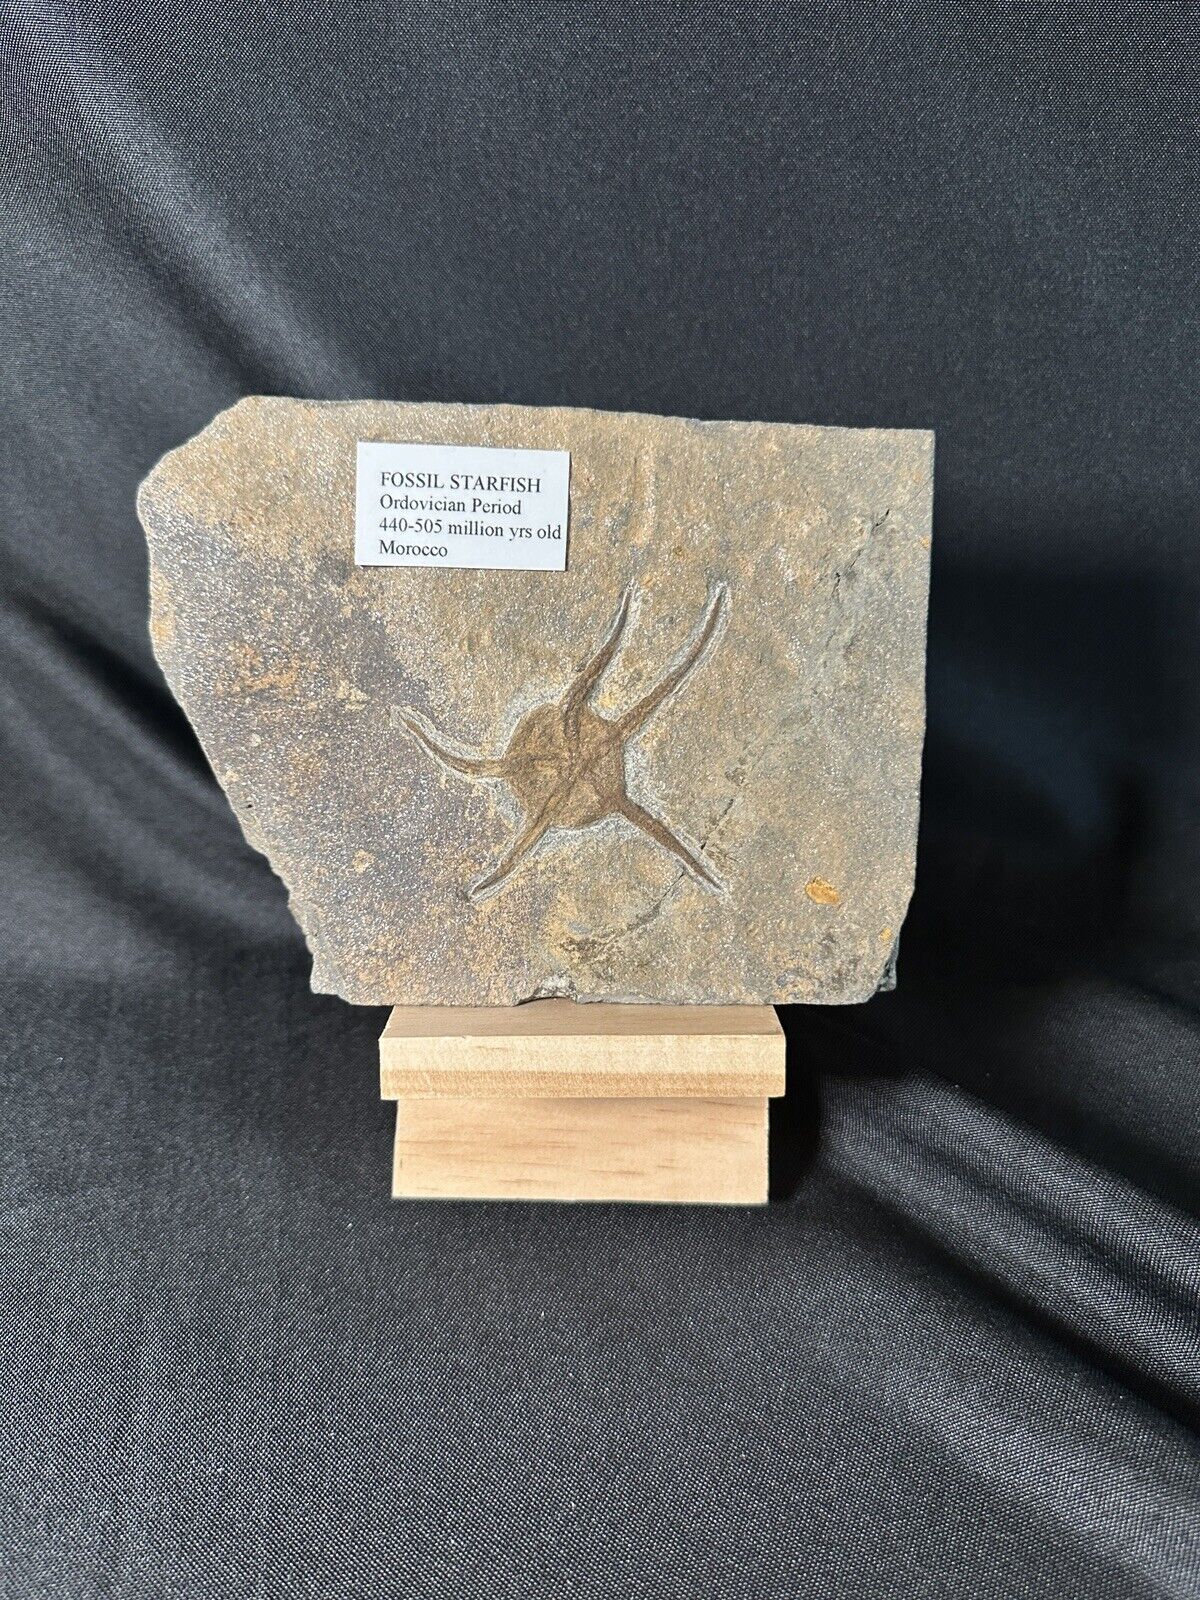 Large Fossil Starfish Geocoma Carinata - Ordovician Period - Morocco 440-505 MYA